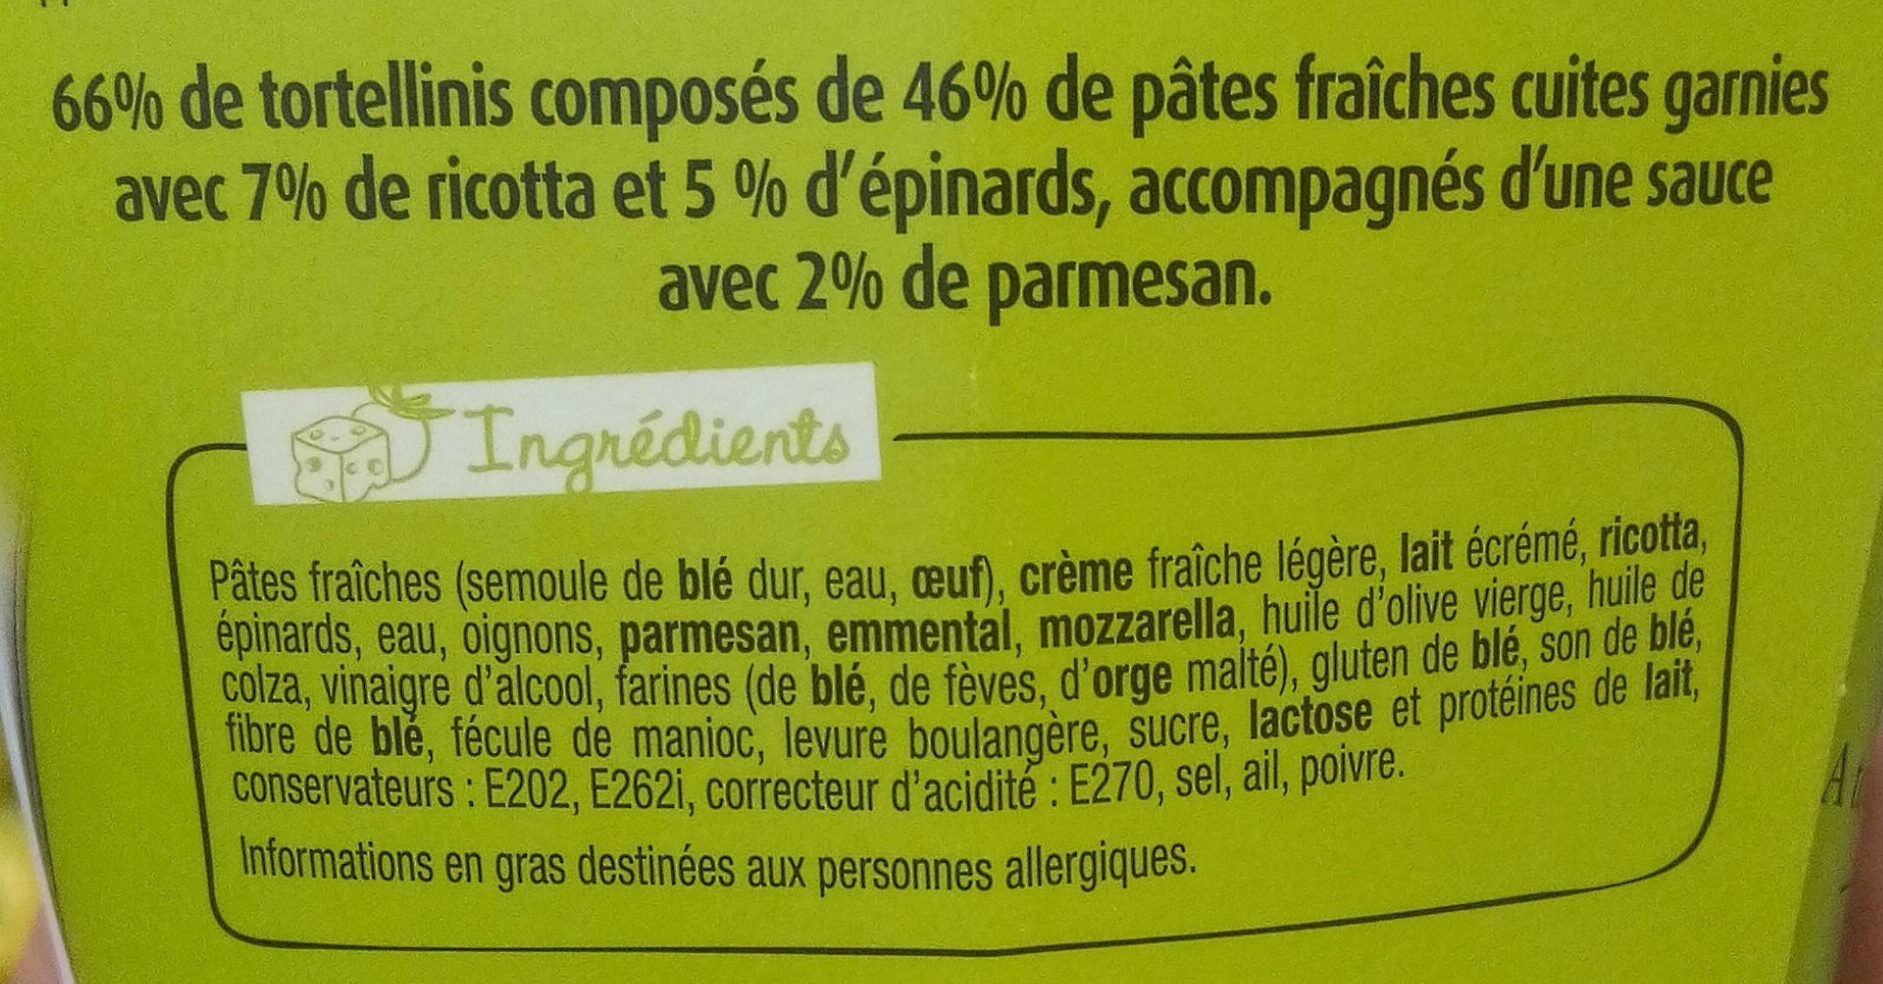 PastaBox - Tortellini Ricotta Epinards Sauce au parmesan - Ingredients - fr